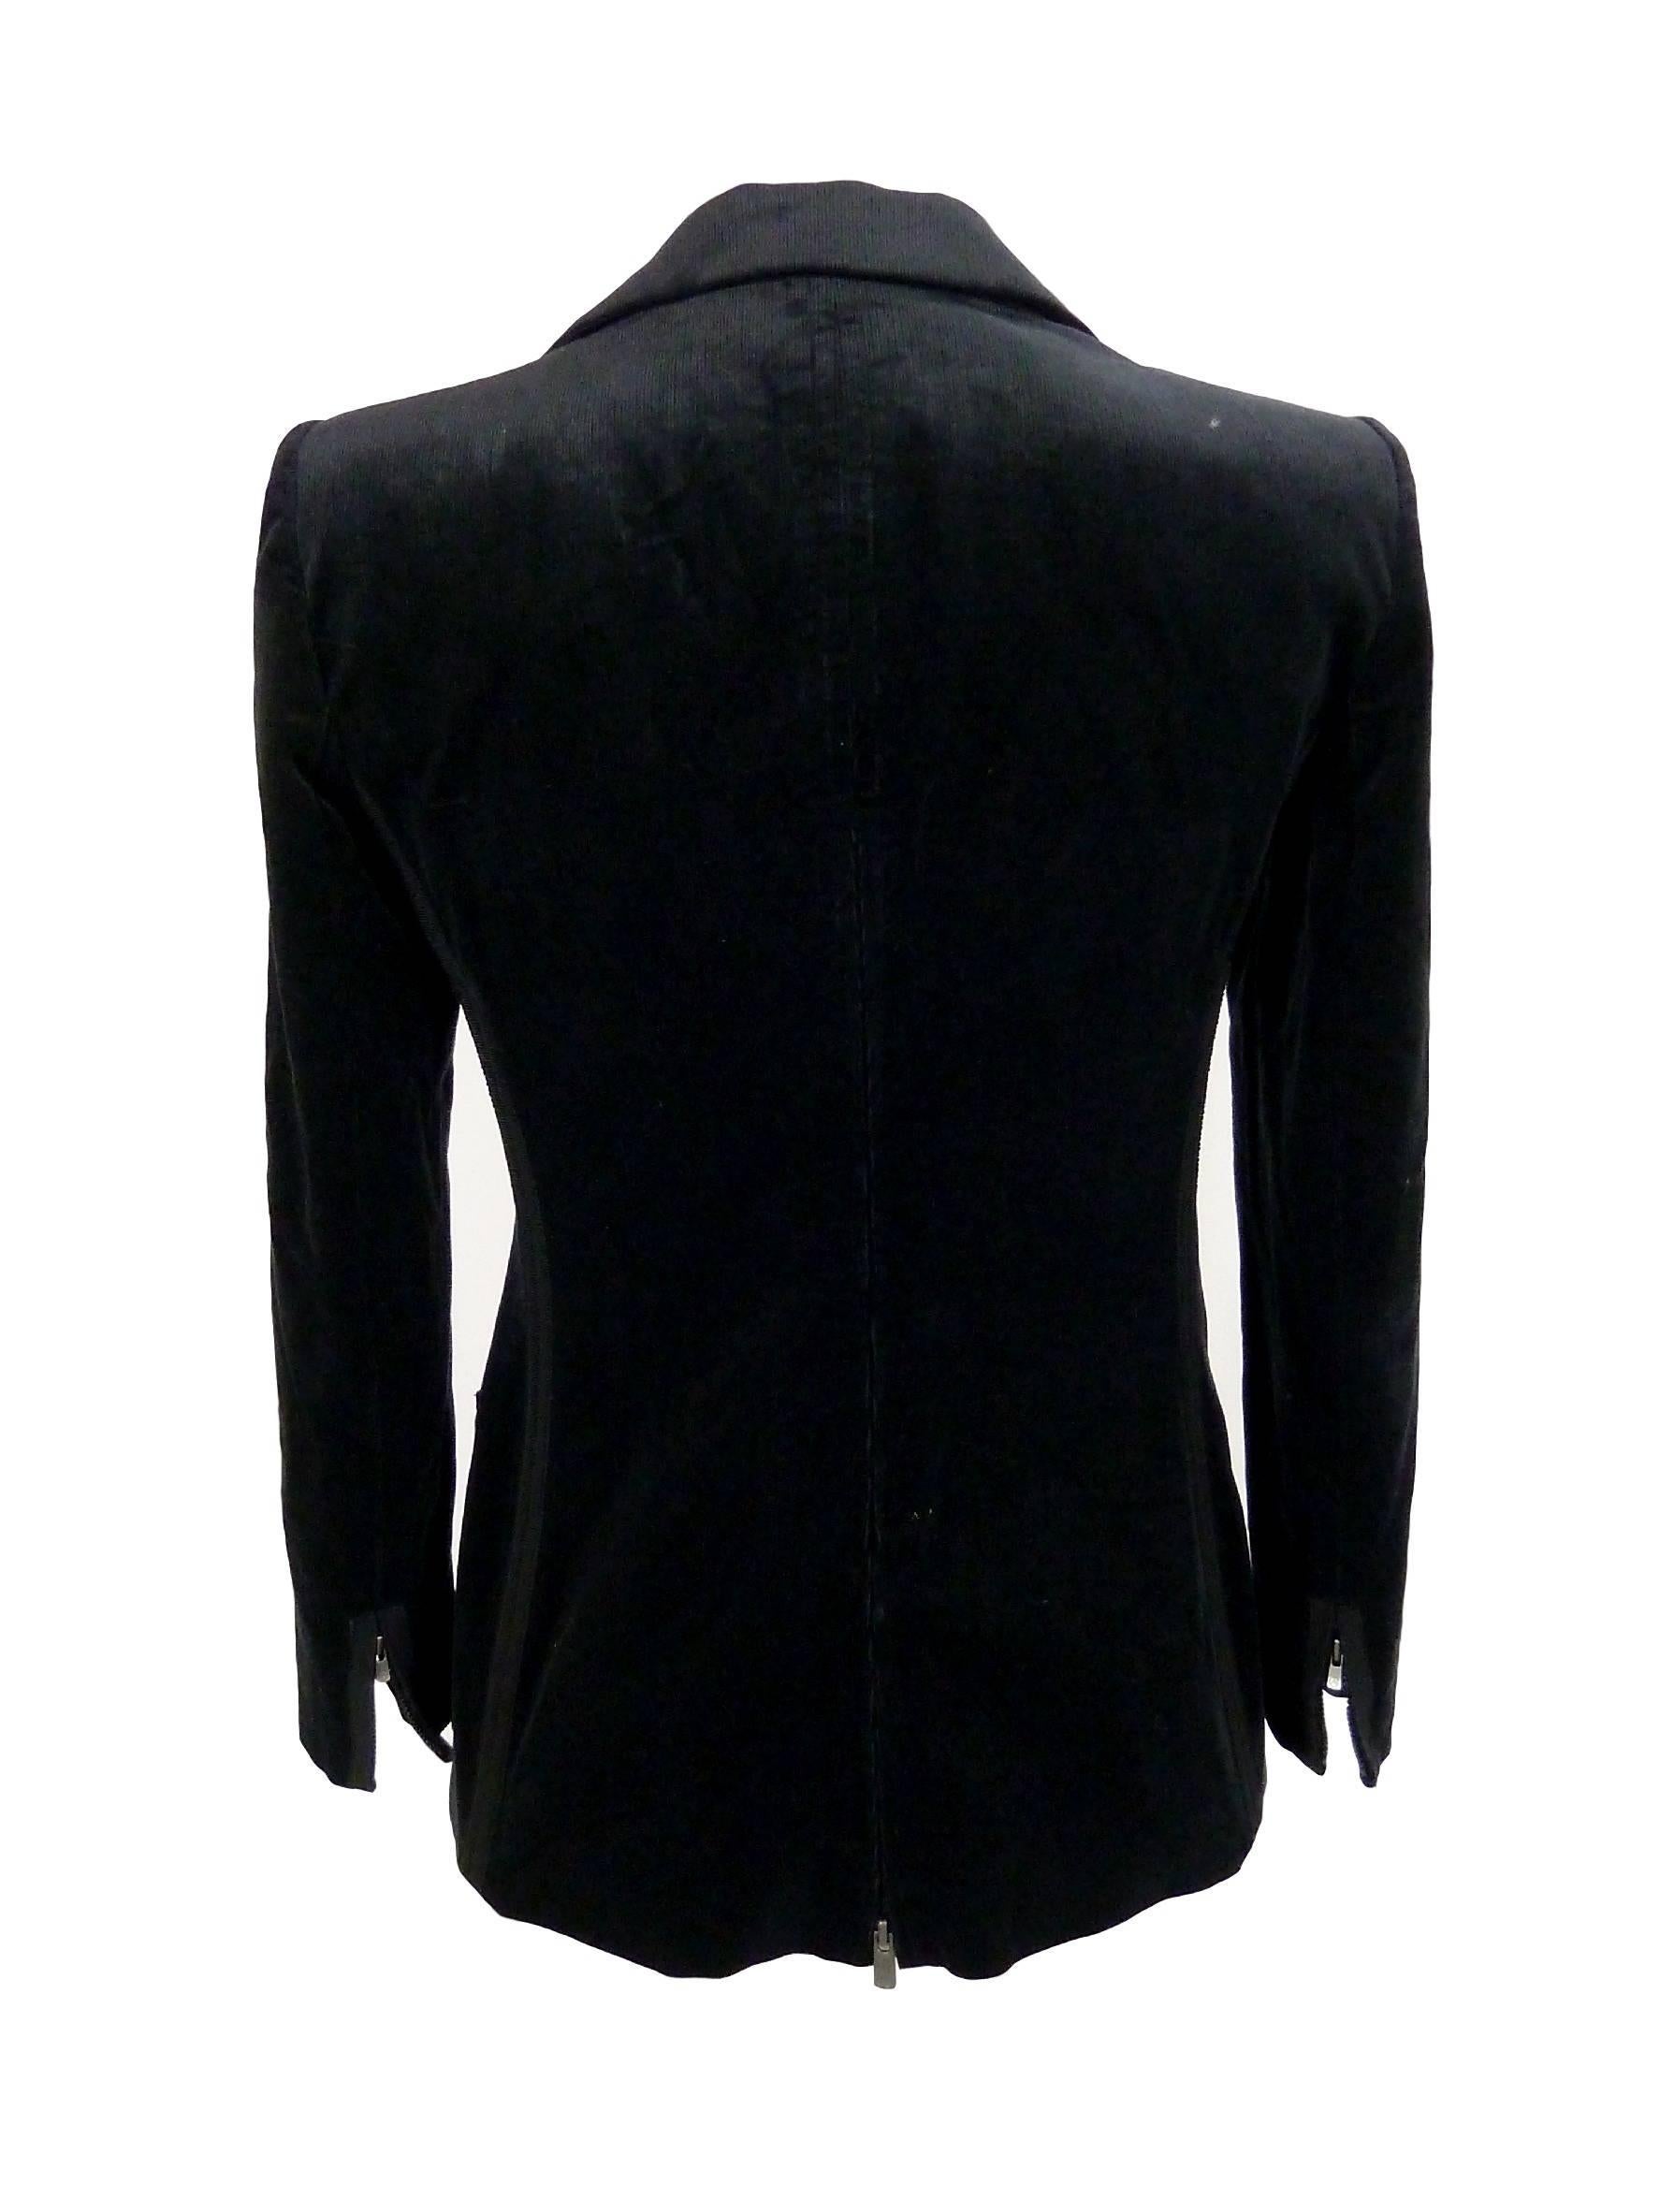 Black Armani Collezioni 1990s jacket Women's classic velvet blazer black size 42 For Sale